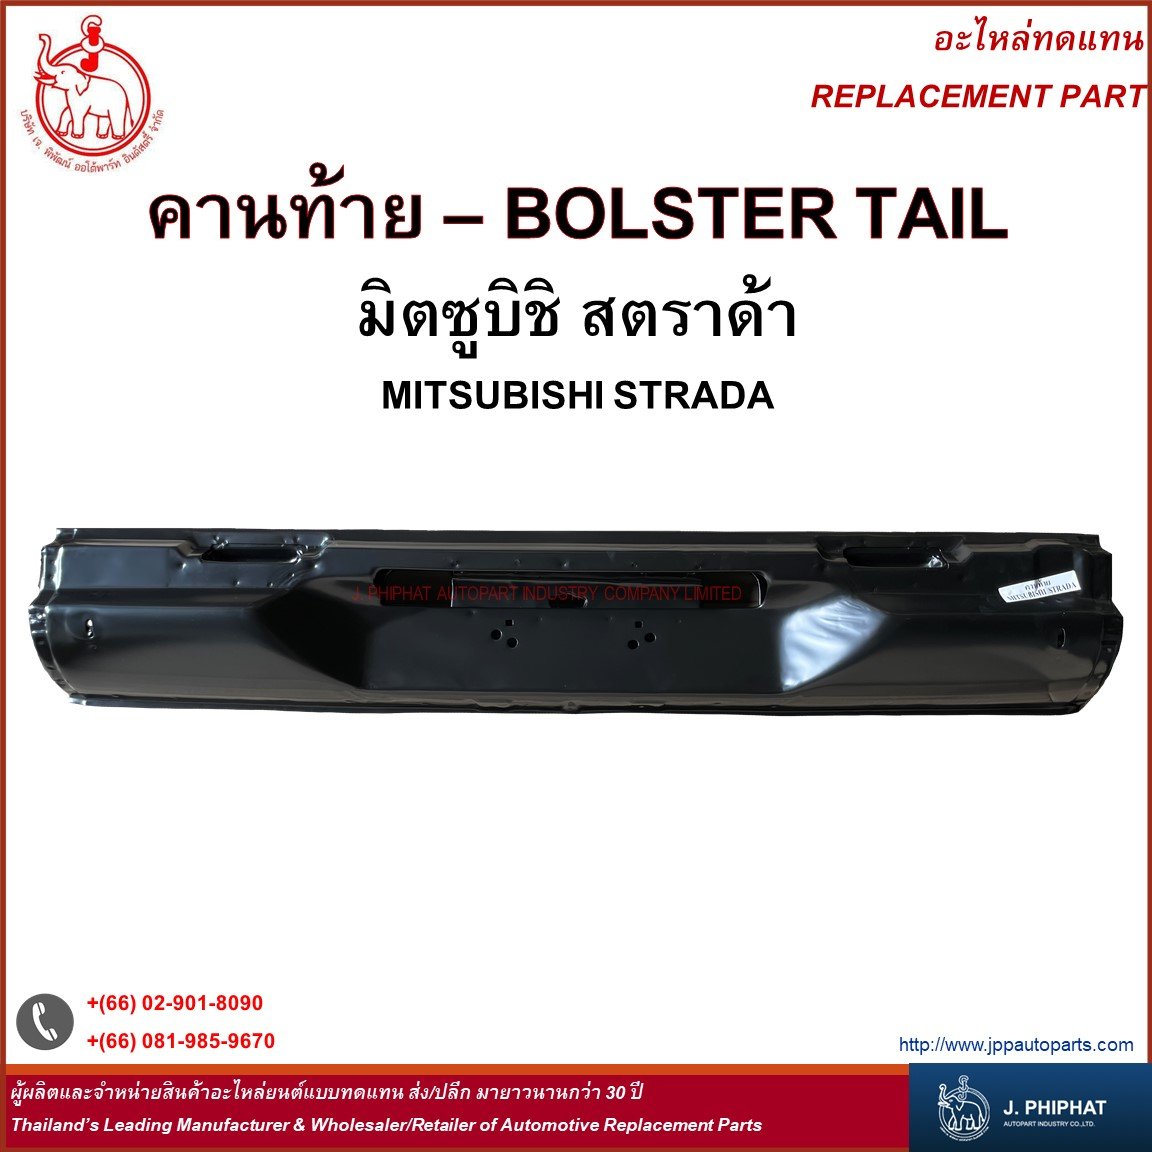 Bolster Tail - Mitsubishi Strada1996